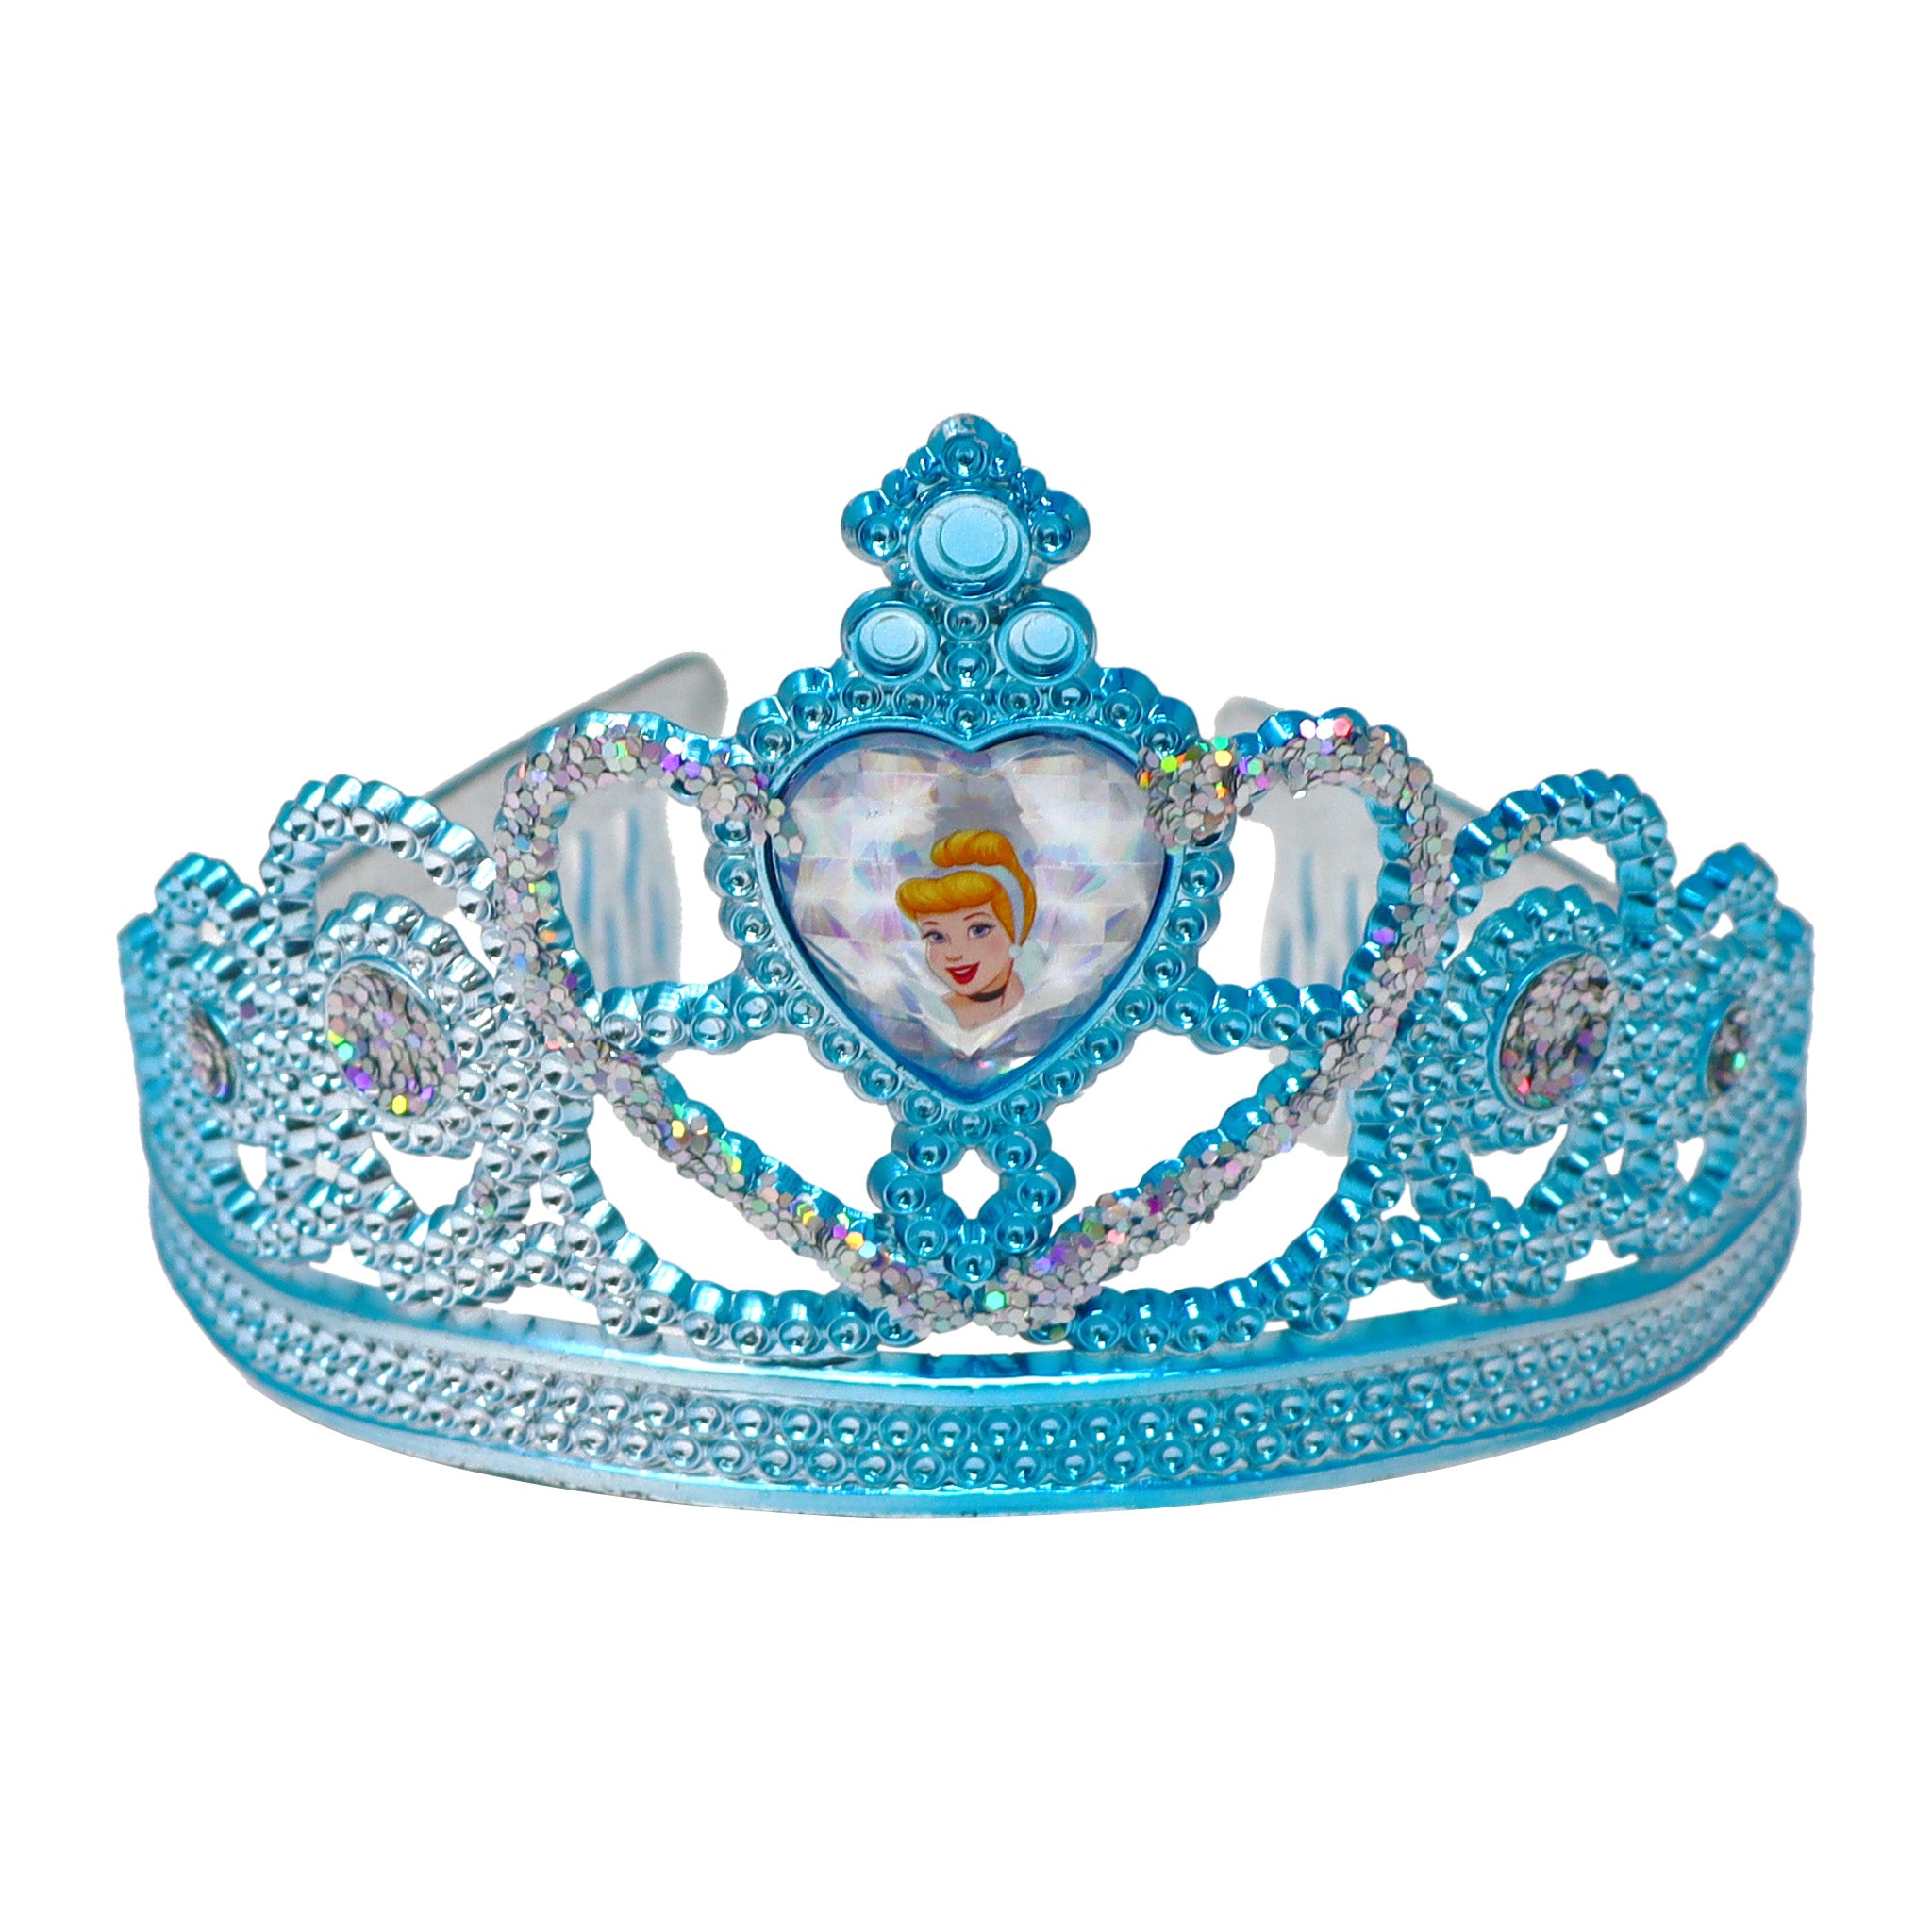 Disney Princess Cinderella Dress Up Accessories Bundle